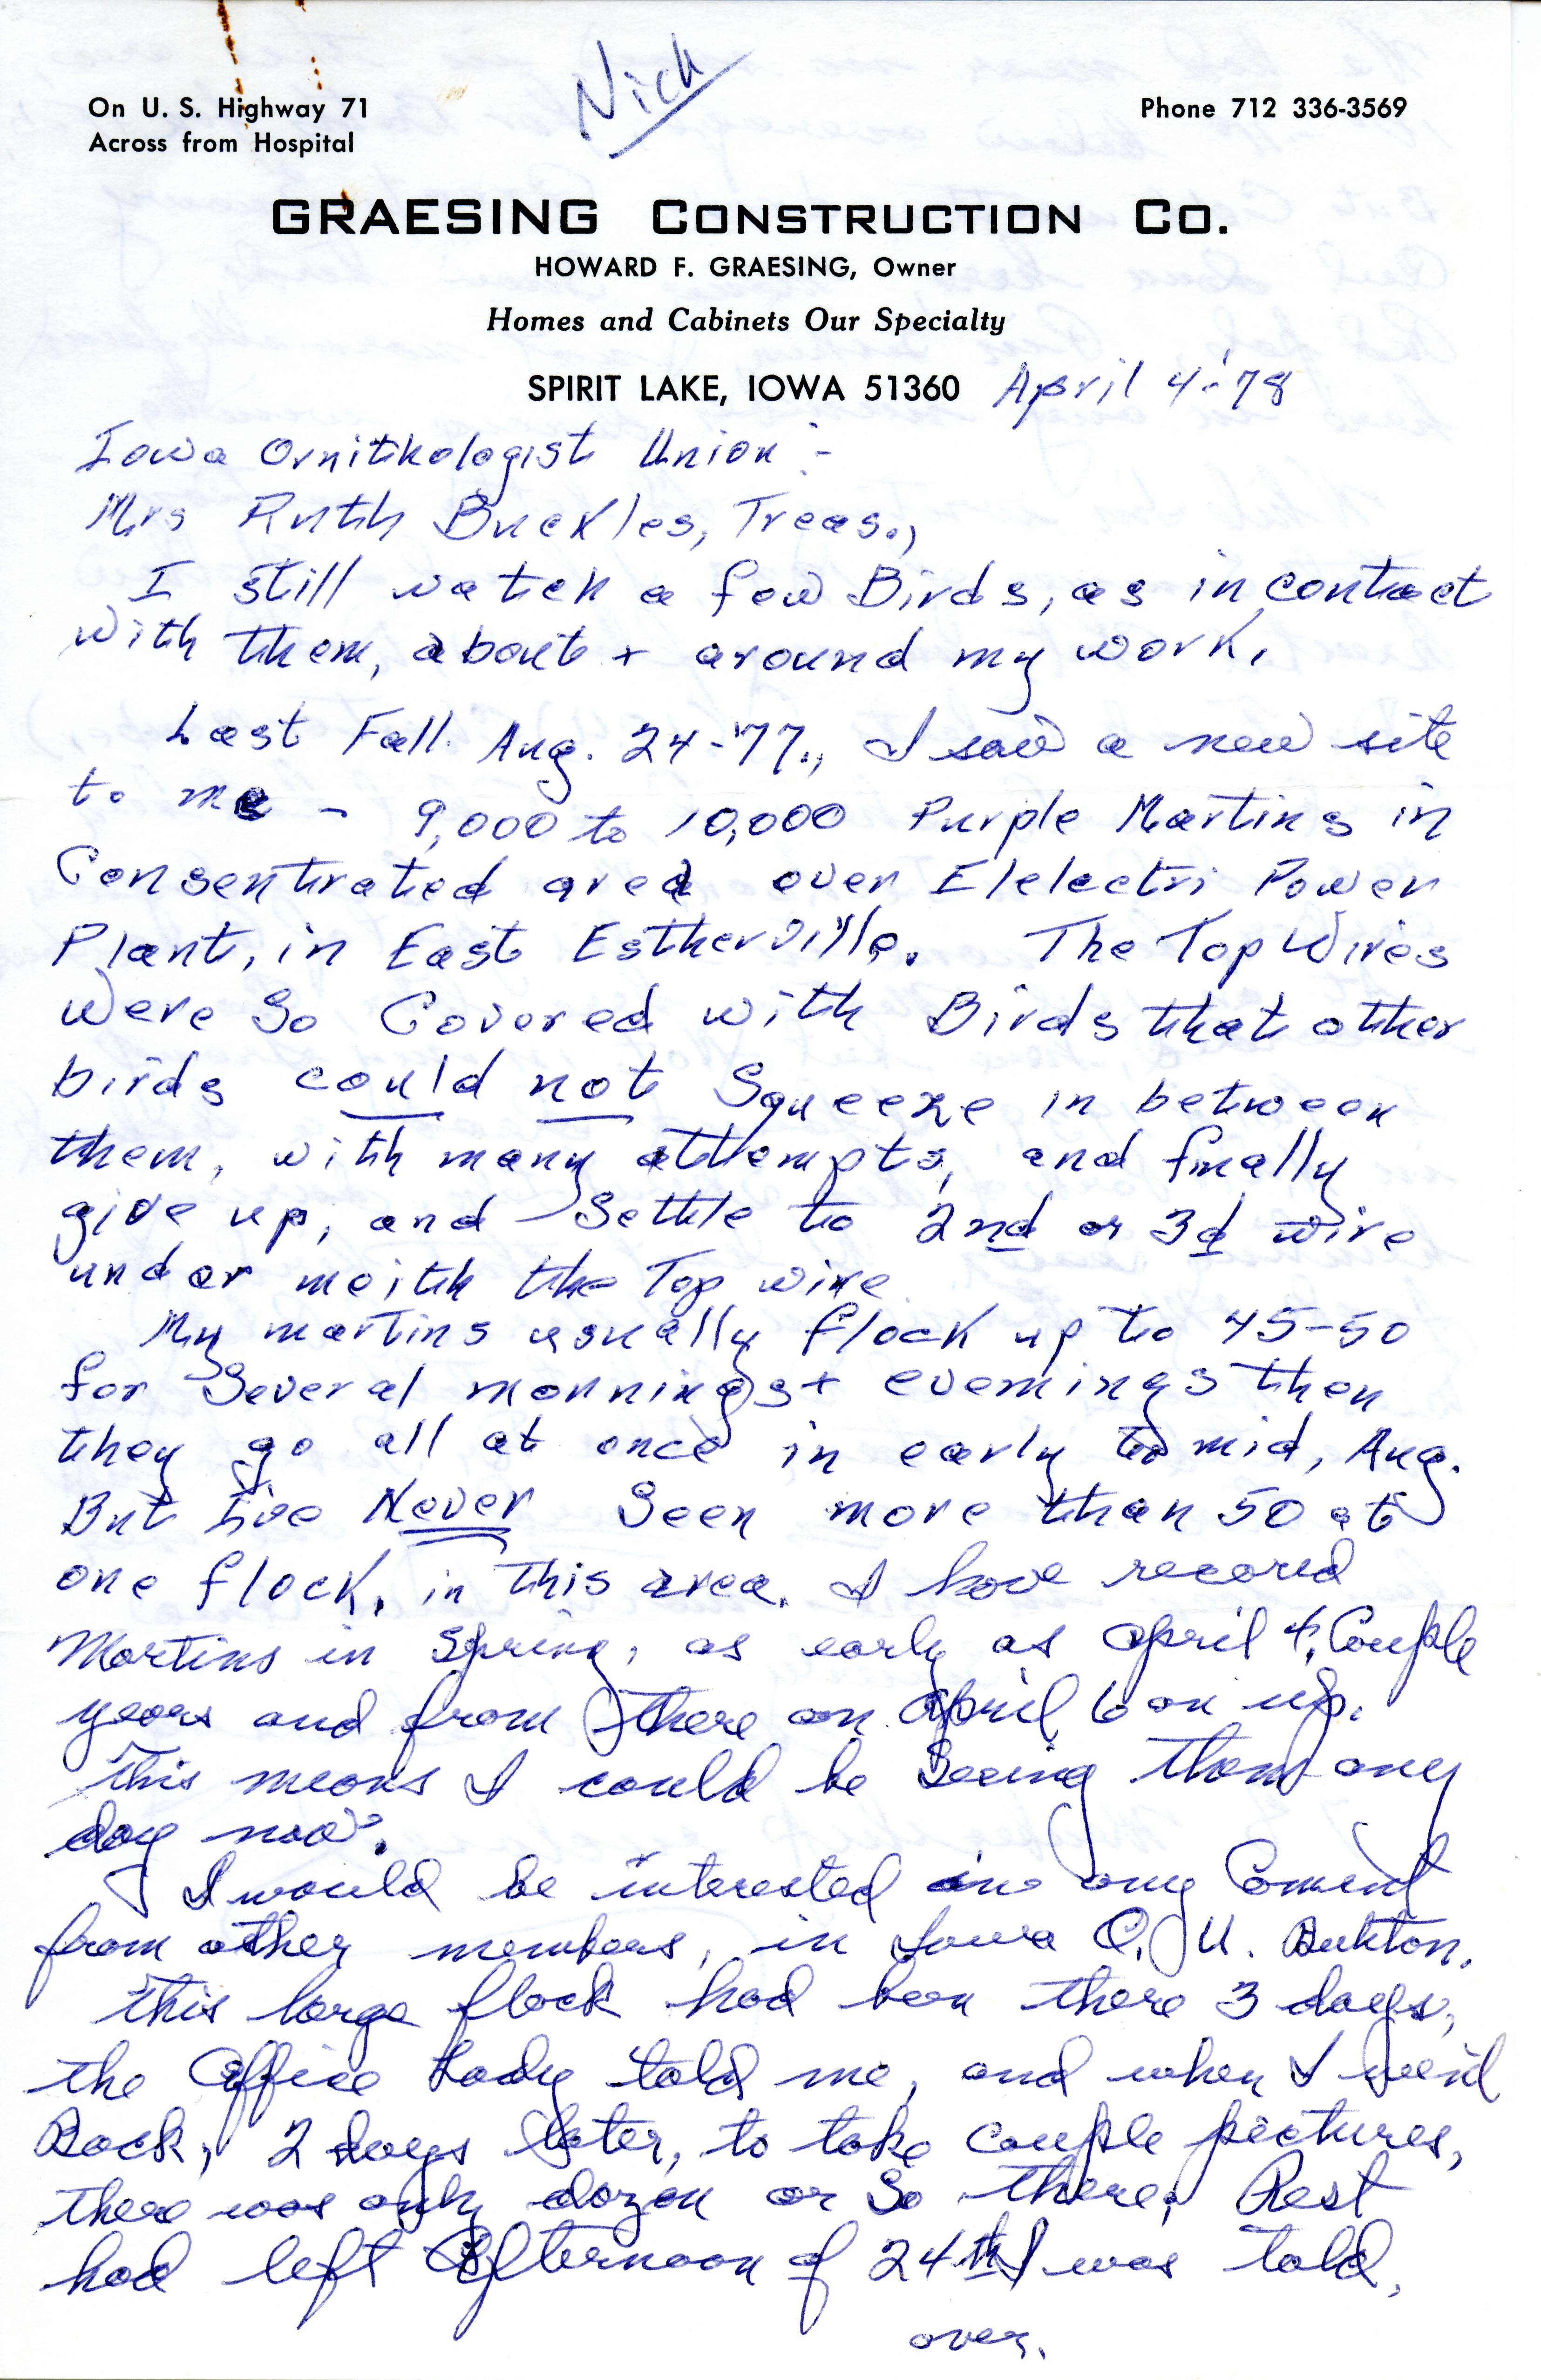 Howard Graesing letter to Ruth Buckles regarding bird sightings, April 4, 1978